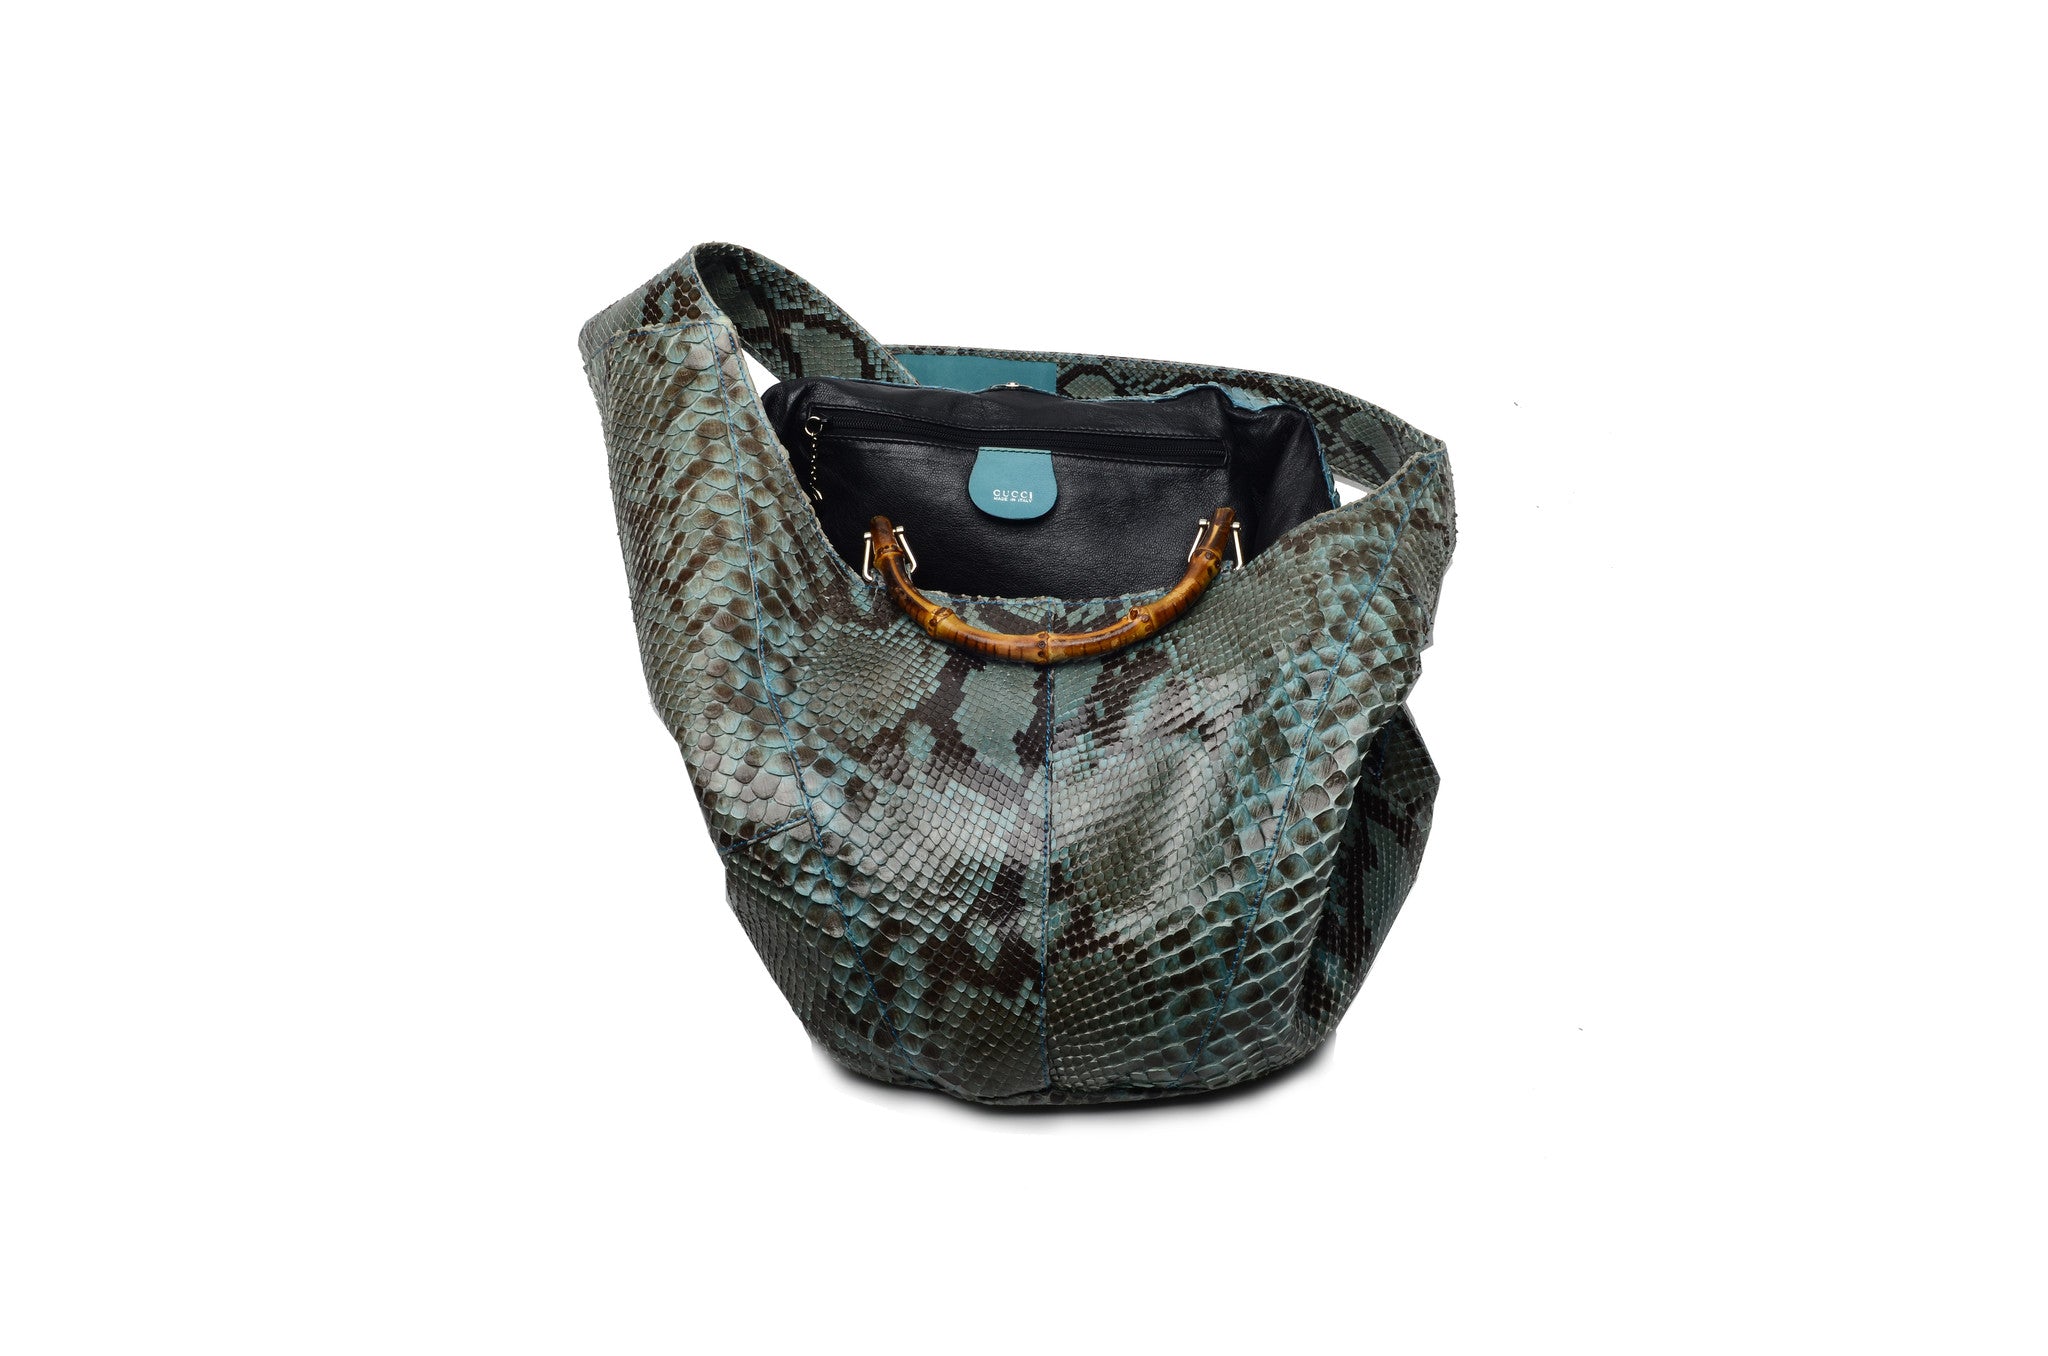 Tory Burch Green/Blue Python Print Patent Leather Shoulder Bag